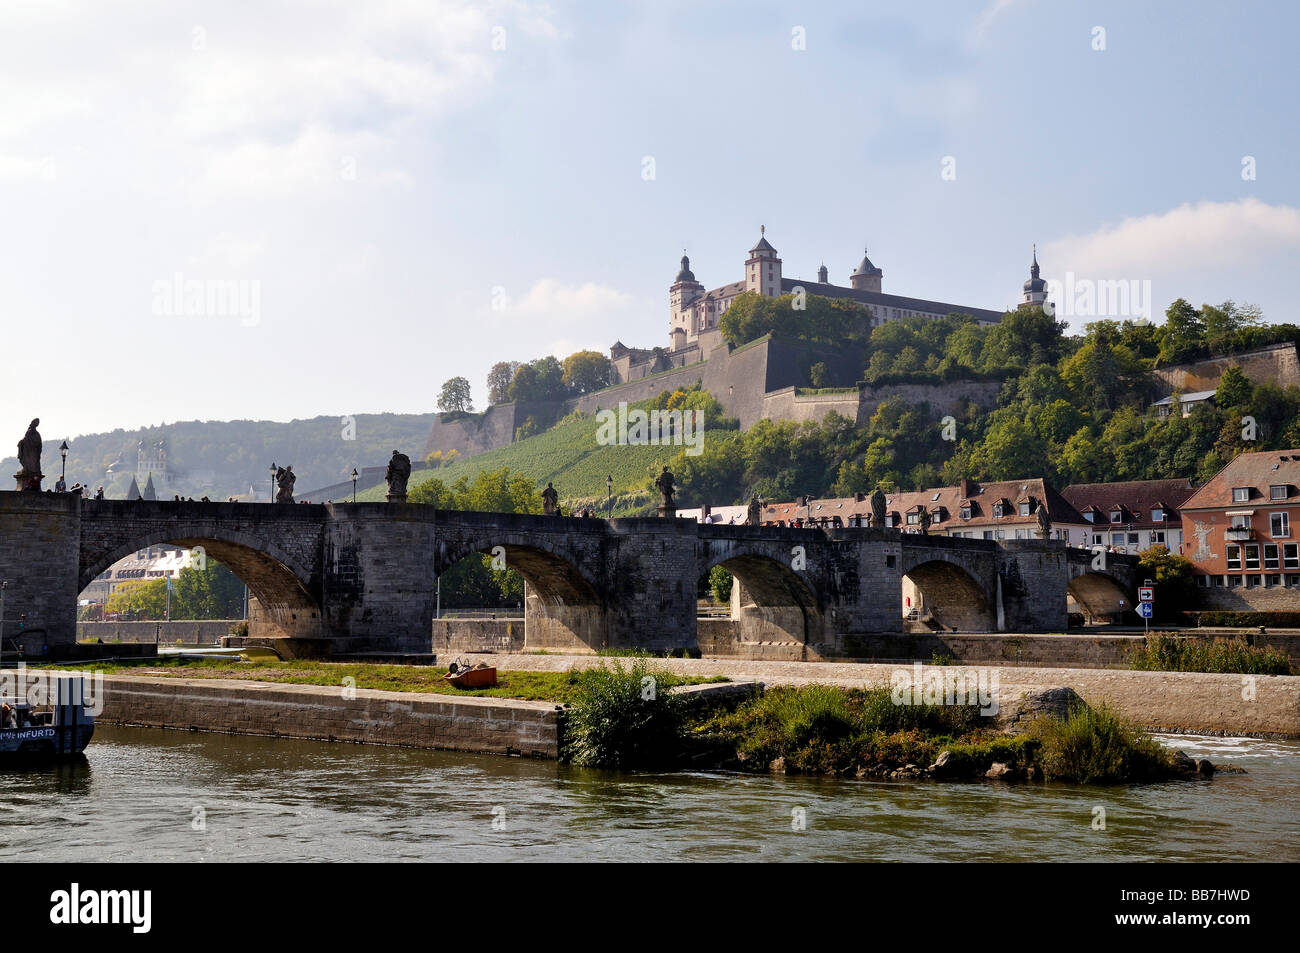 Festung Marienberg fortress and Alte Mainbruecke, old bridge across the Main river, Wuerzburg, Franconia, Germany Stock Photo